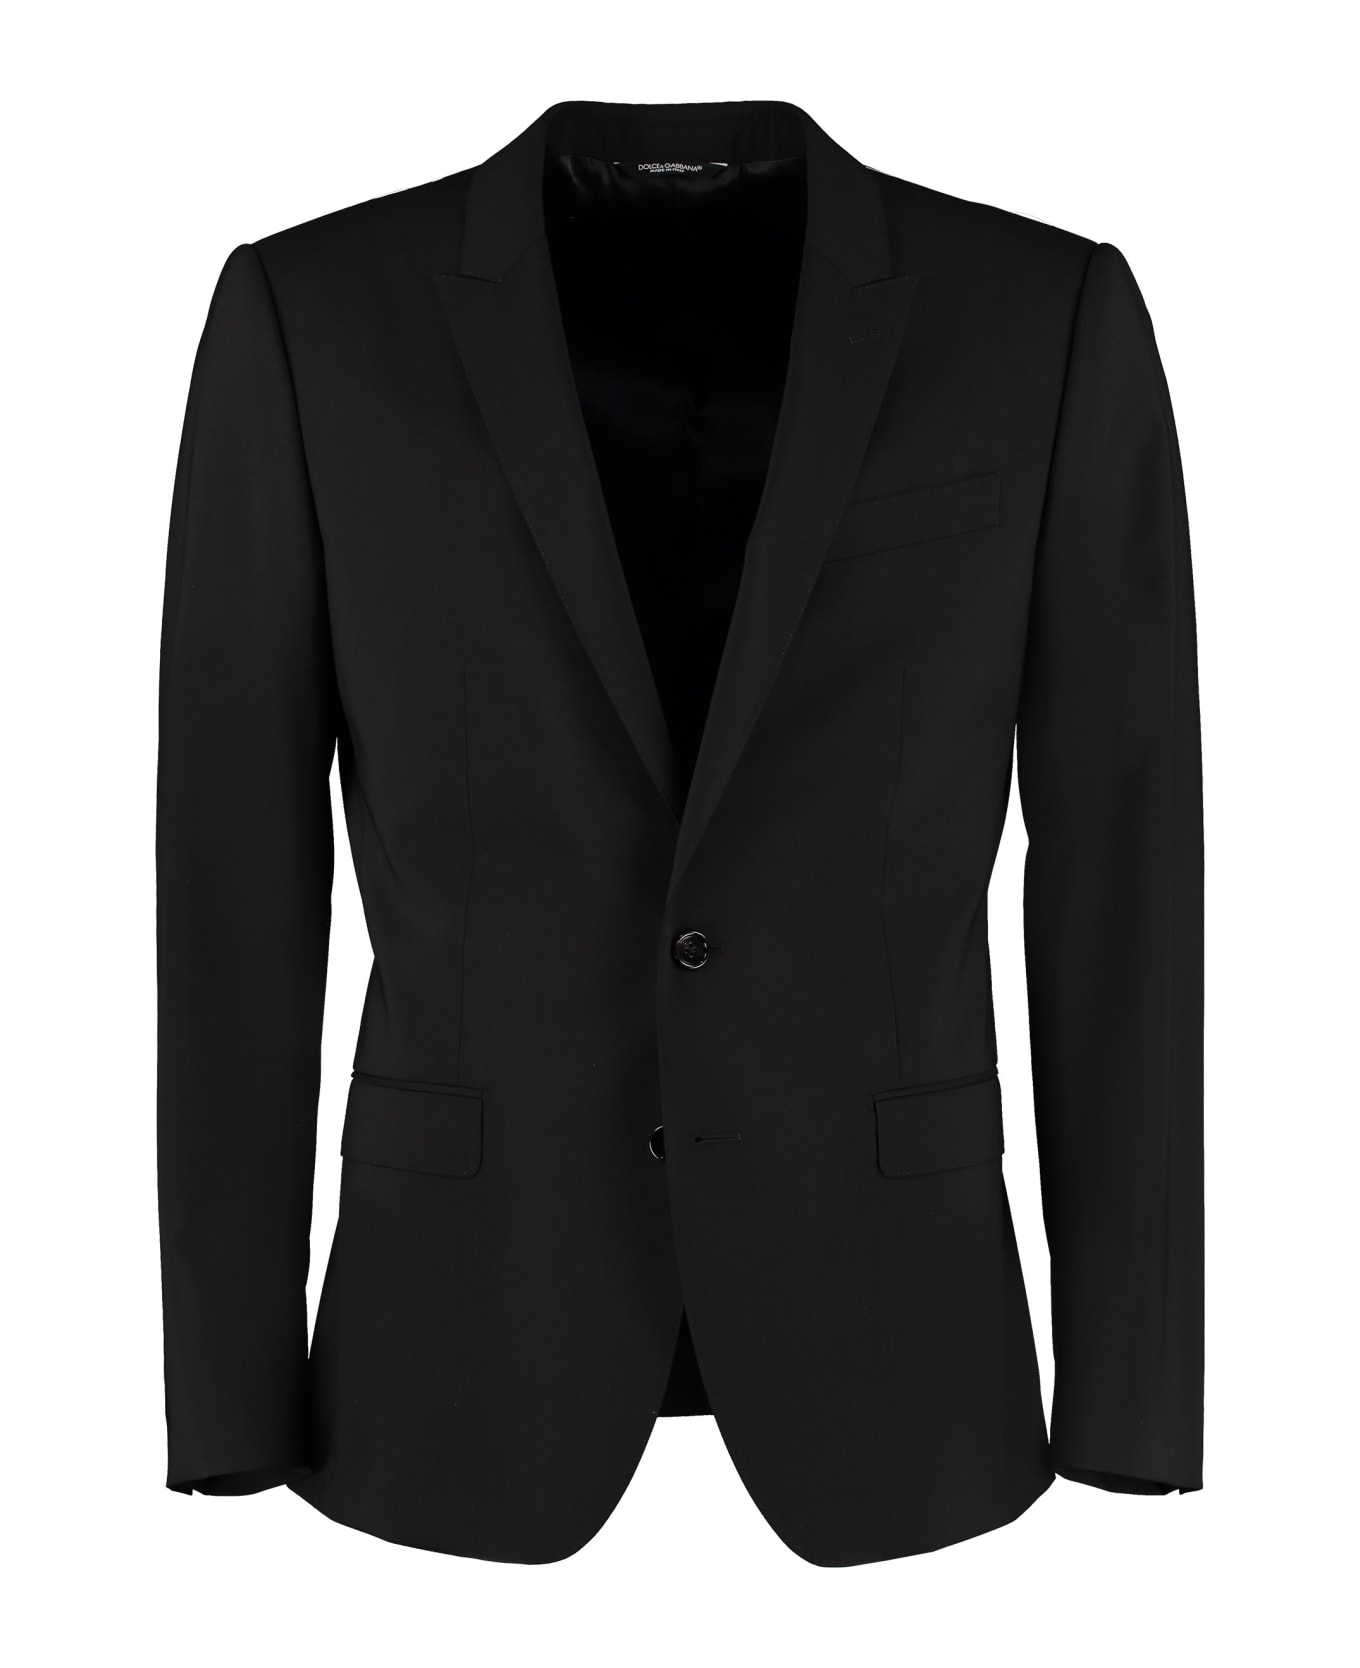 Dolce & Gabbana Martini Virgin Wool Suit - Nero スーツ